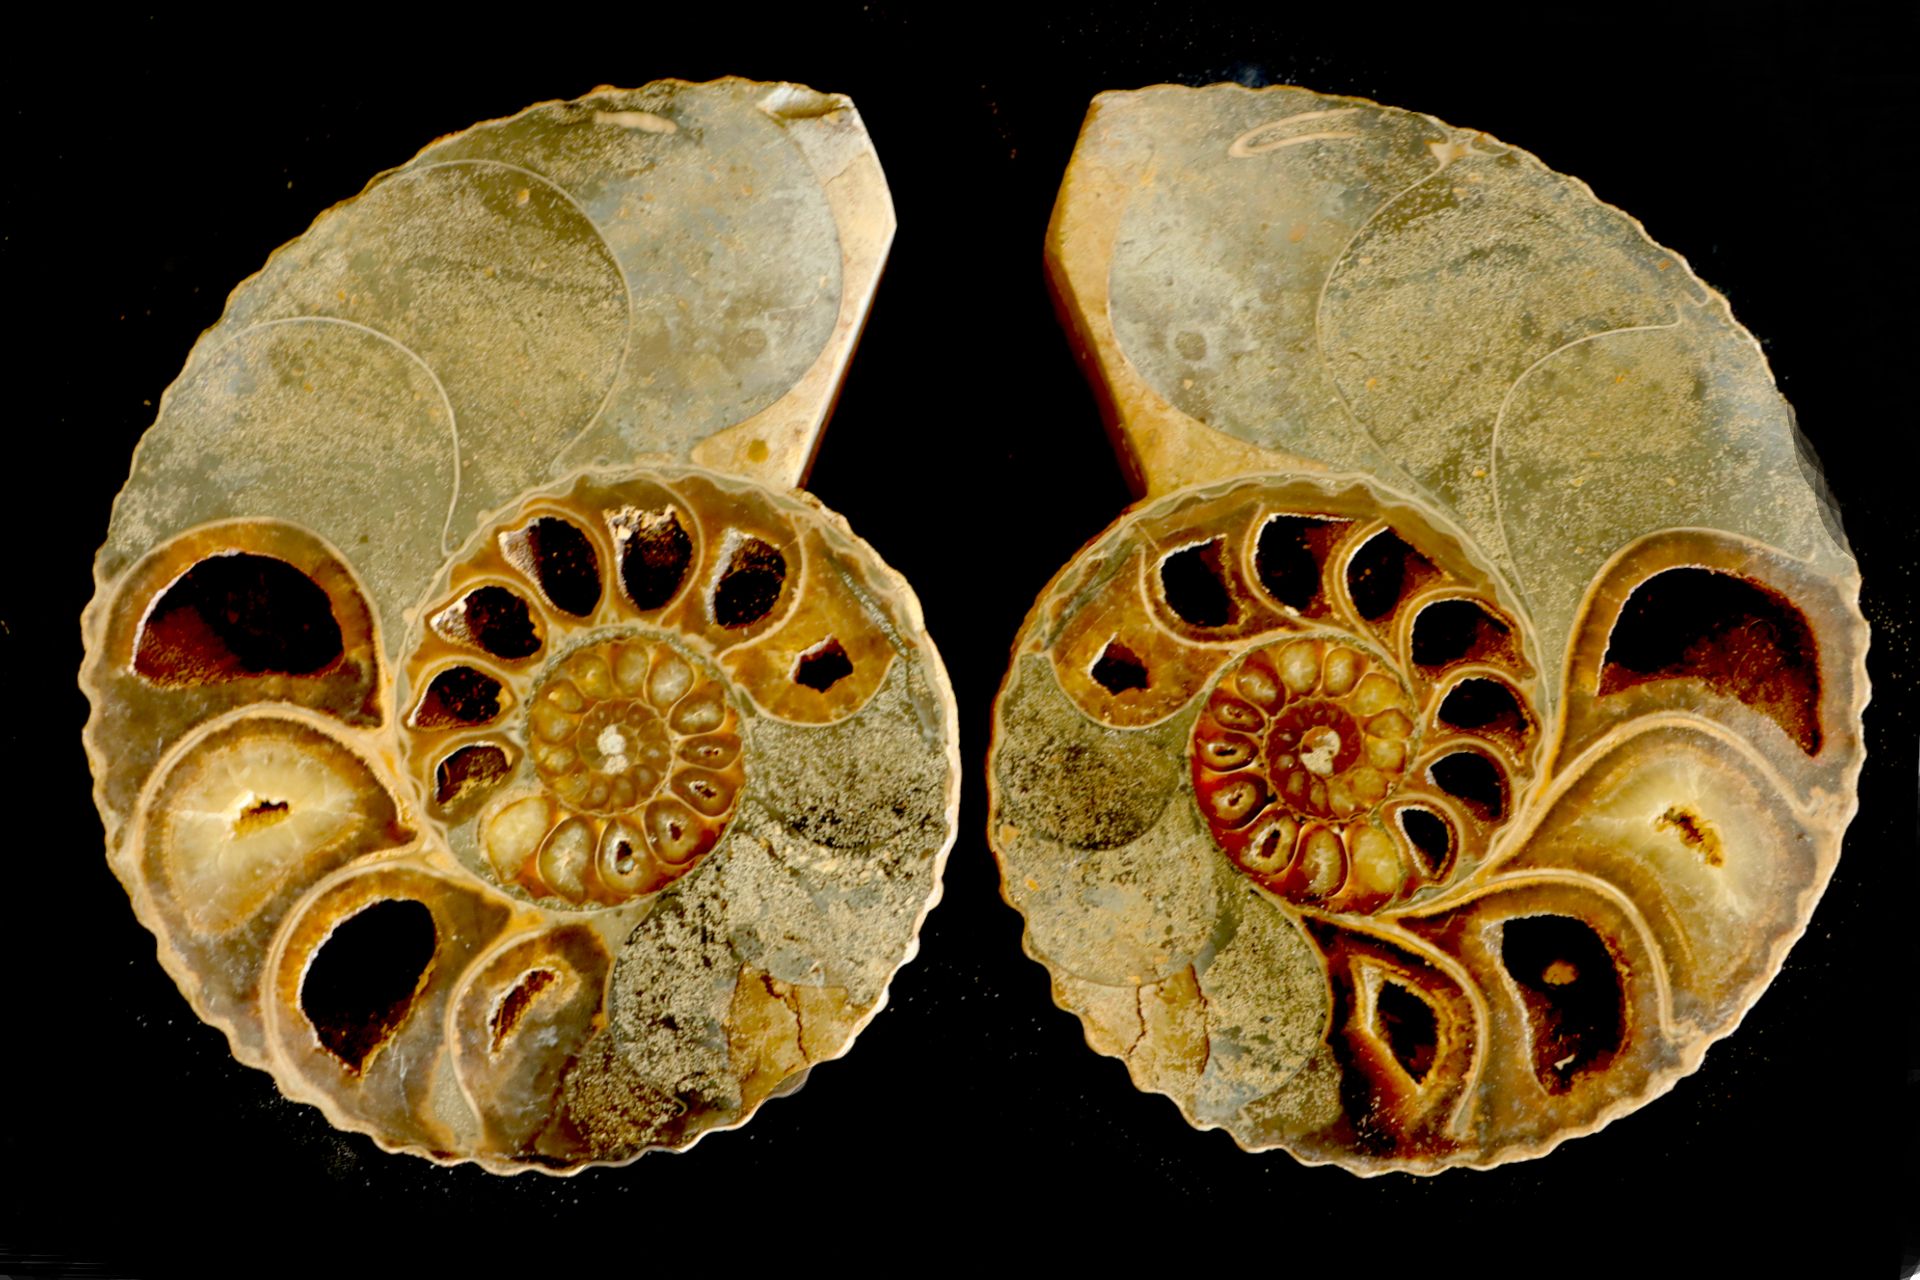 Grosse ammonite sciée de Madagascar 来自马达加斯加的大型锯齿状氨化石-尺寸为20厘米-3公斤